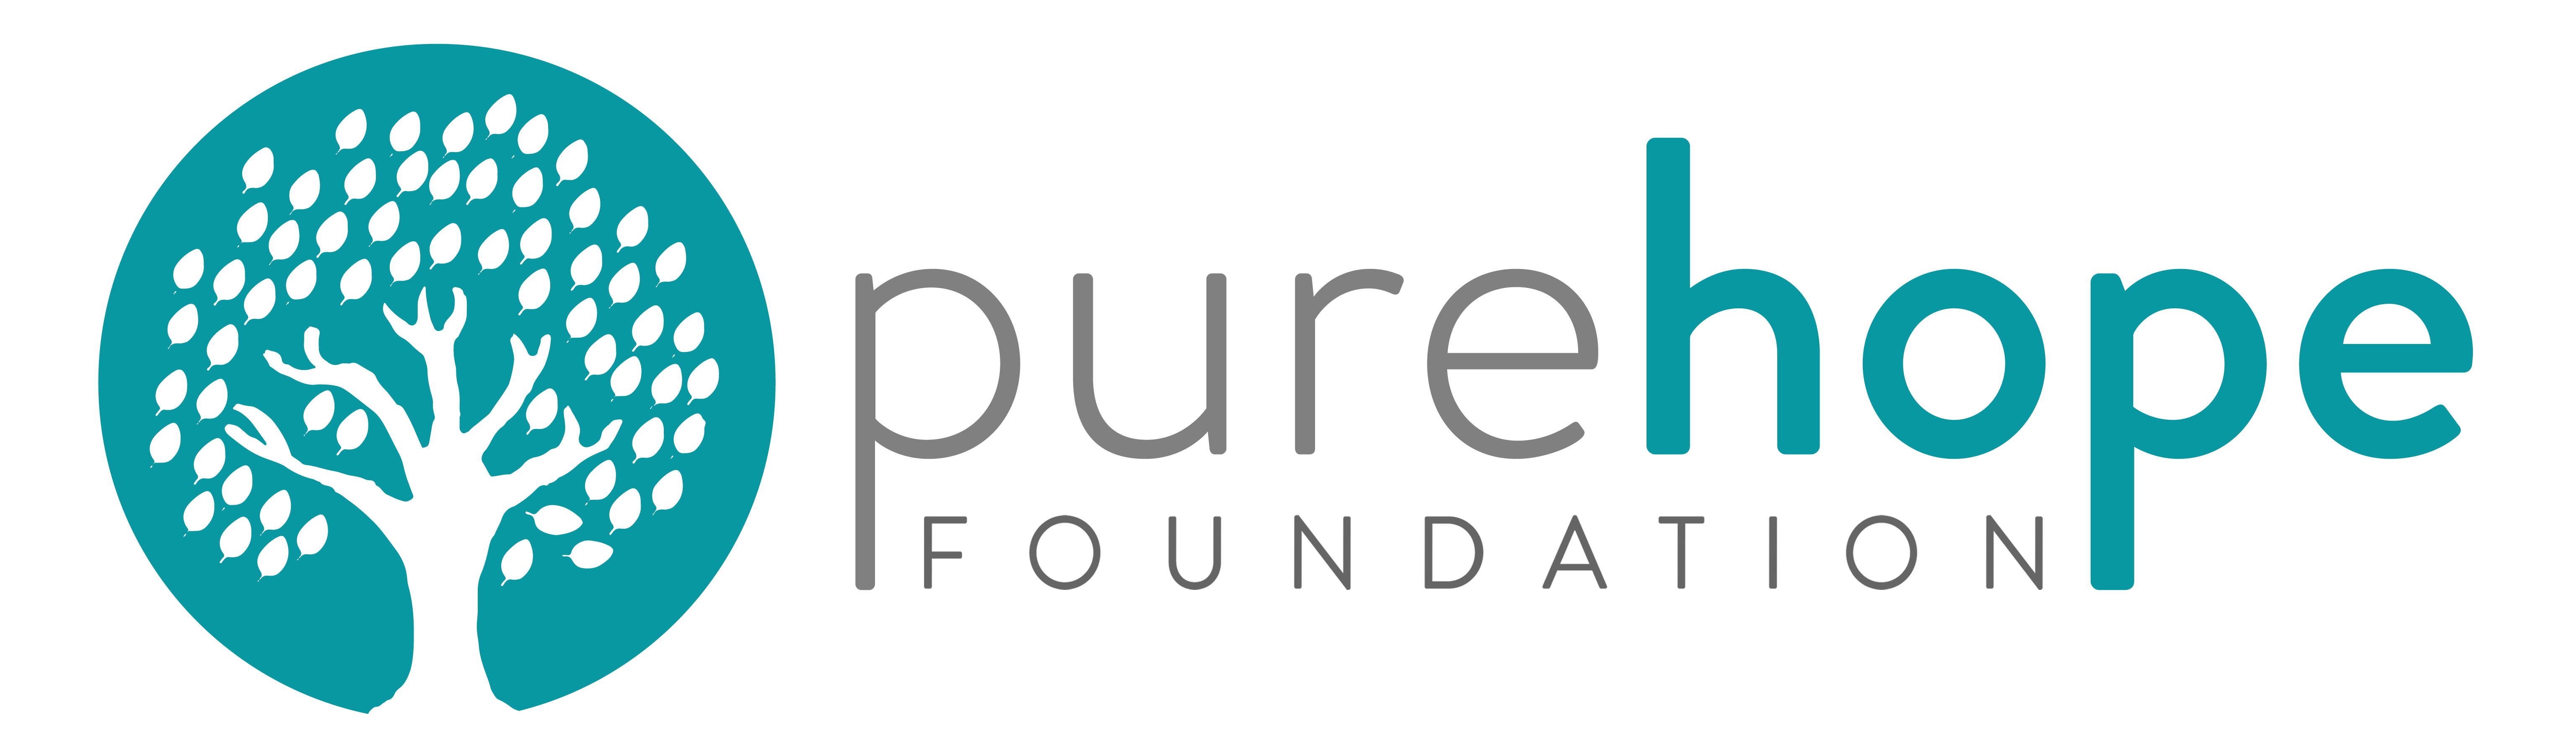 pure hope foundation logo